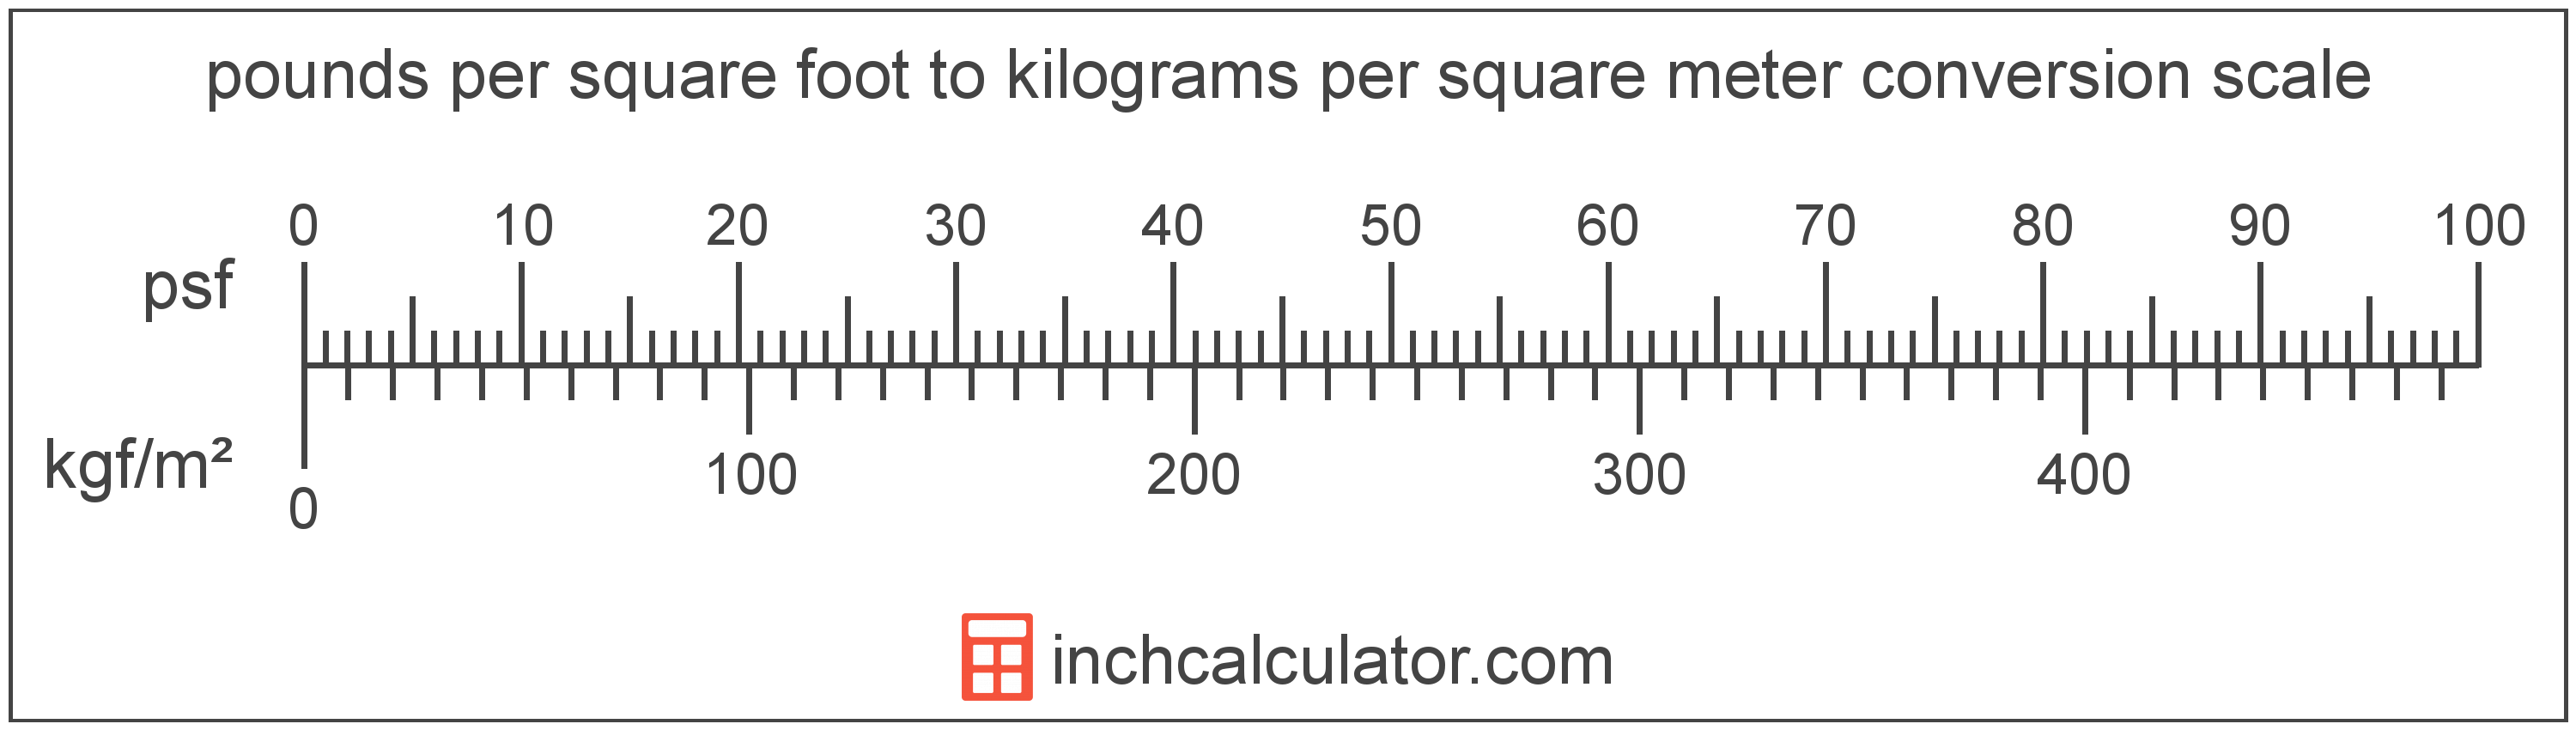 conversion scale showing pounds per square foot and equivalent kilograms per square meter pressure values